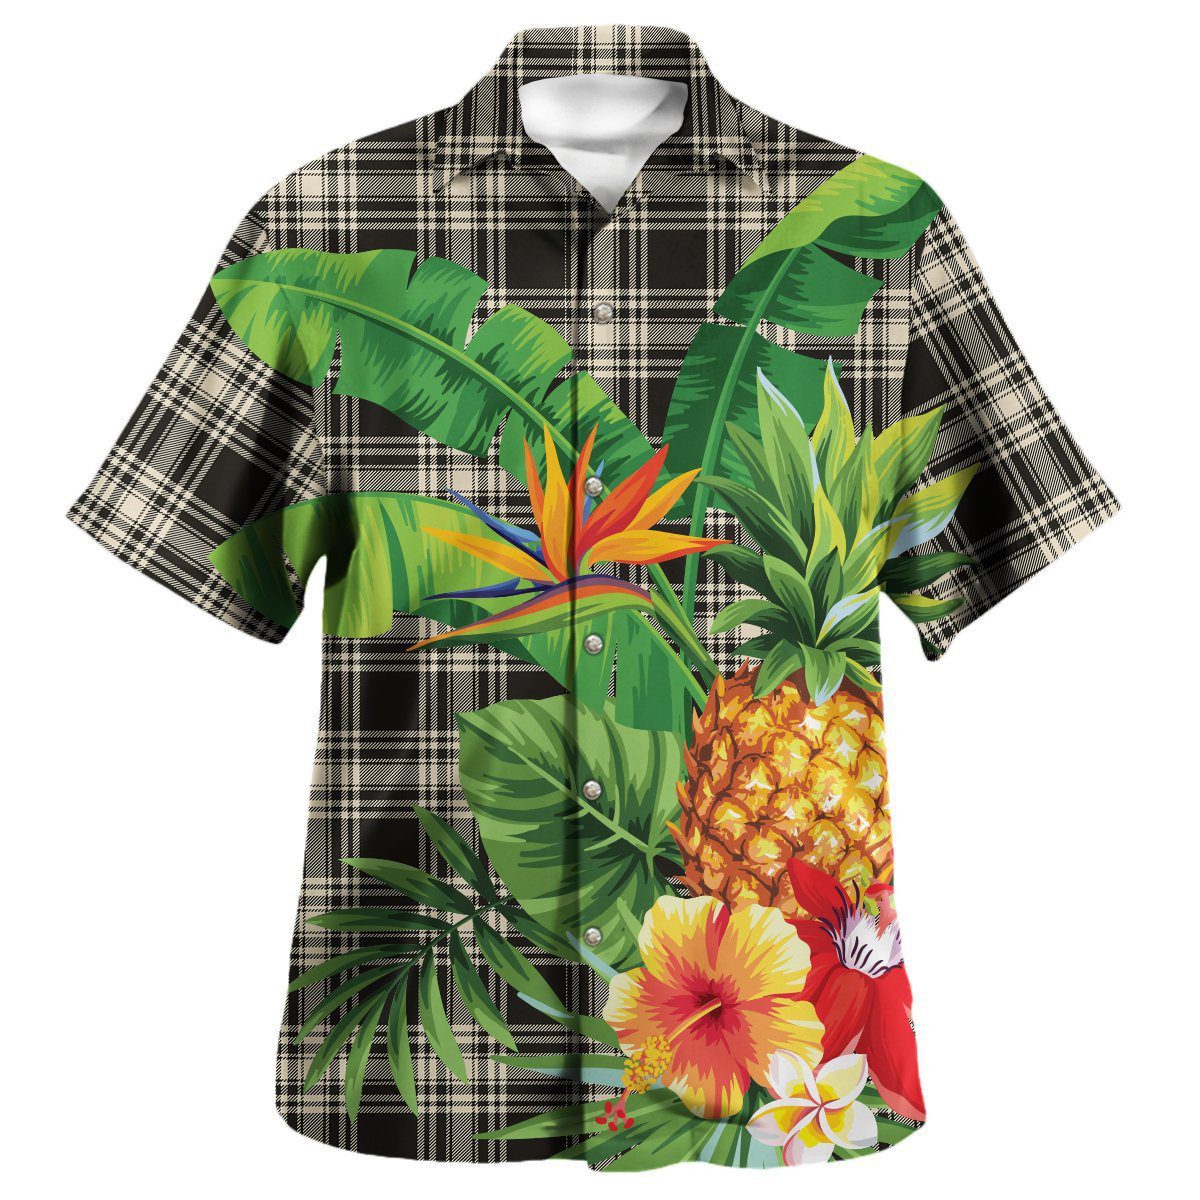 Menzies Black & White Ancient Tartan Aloha Shirt version 2